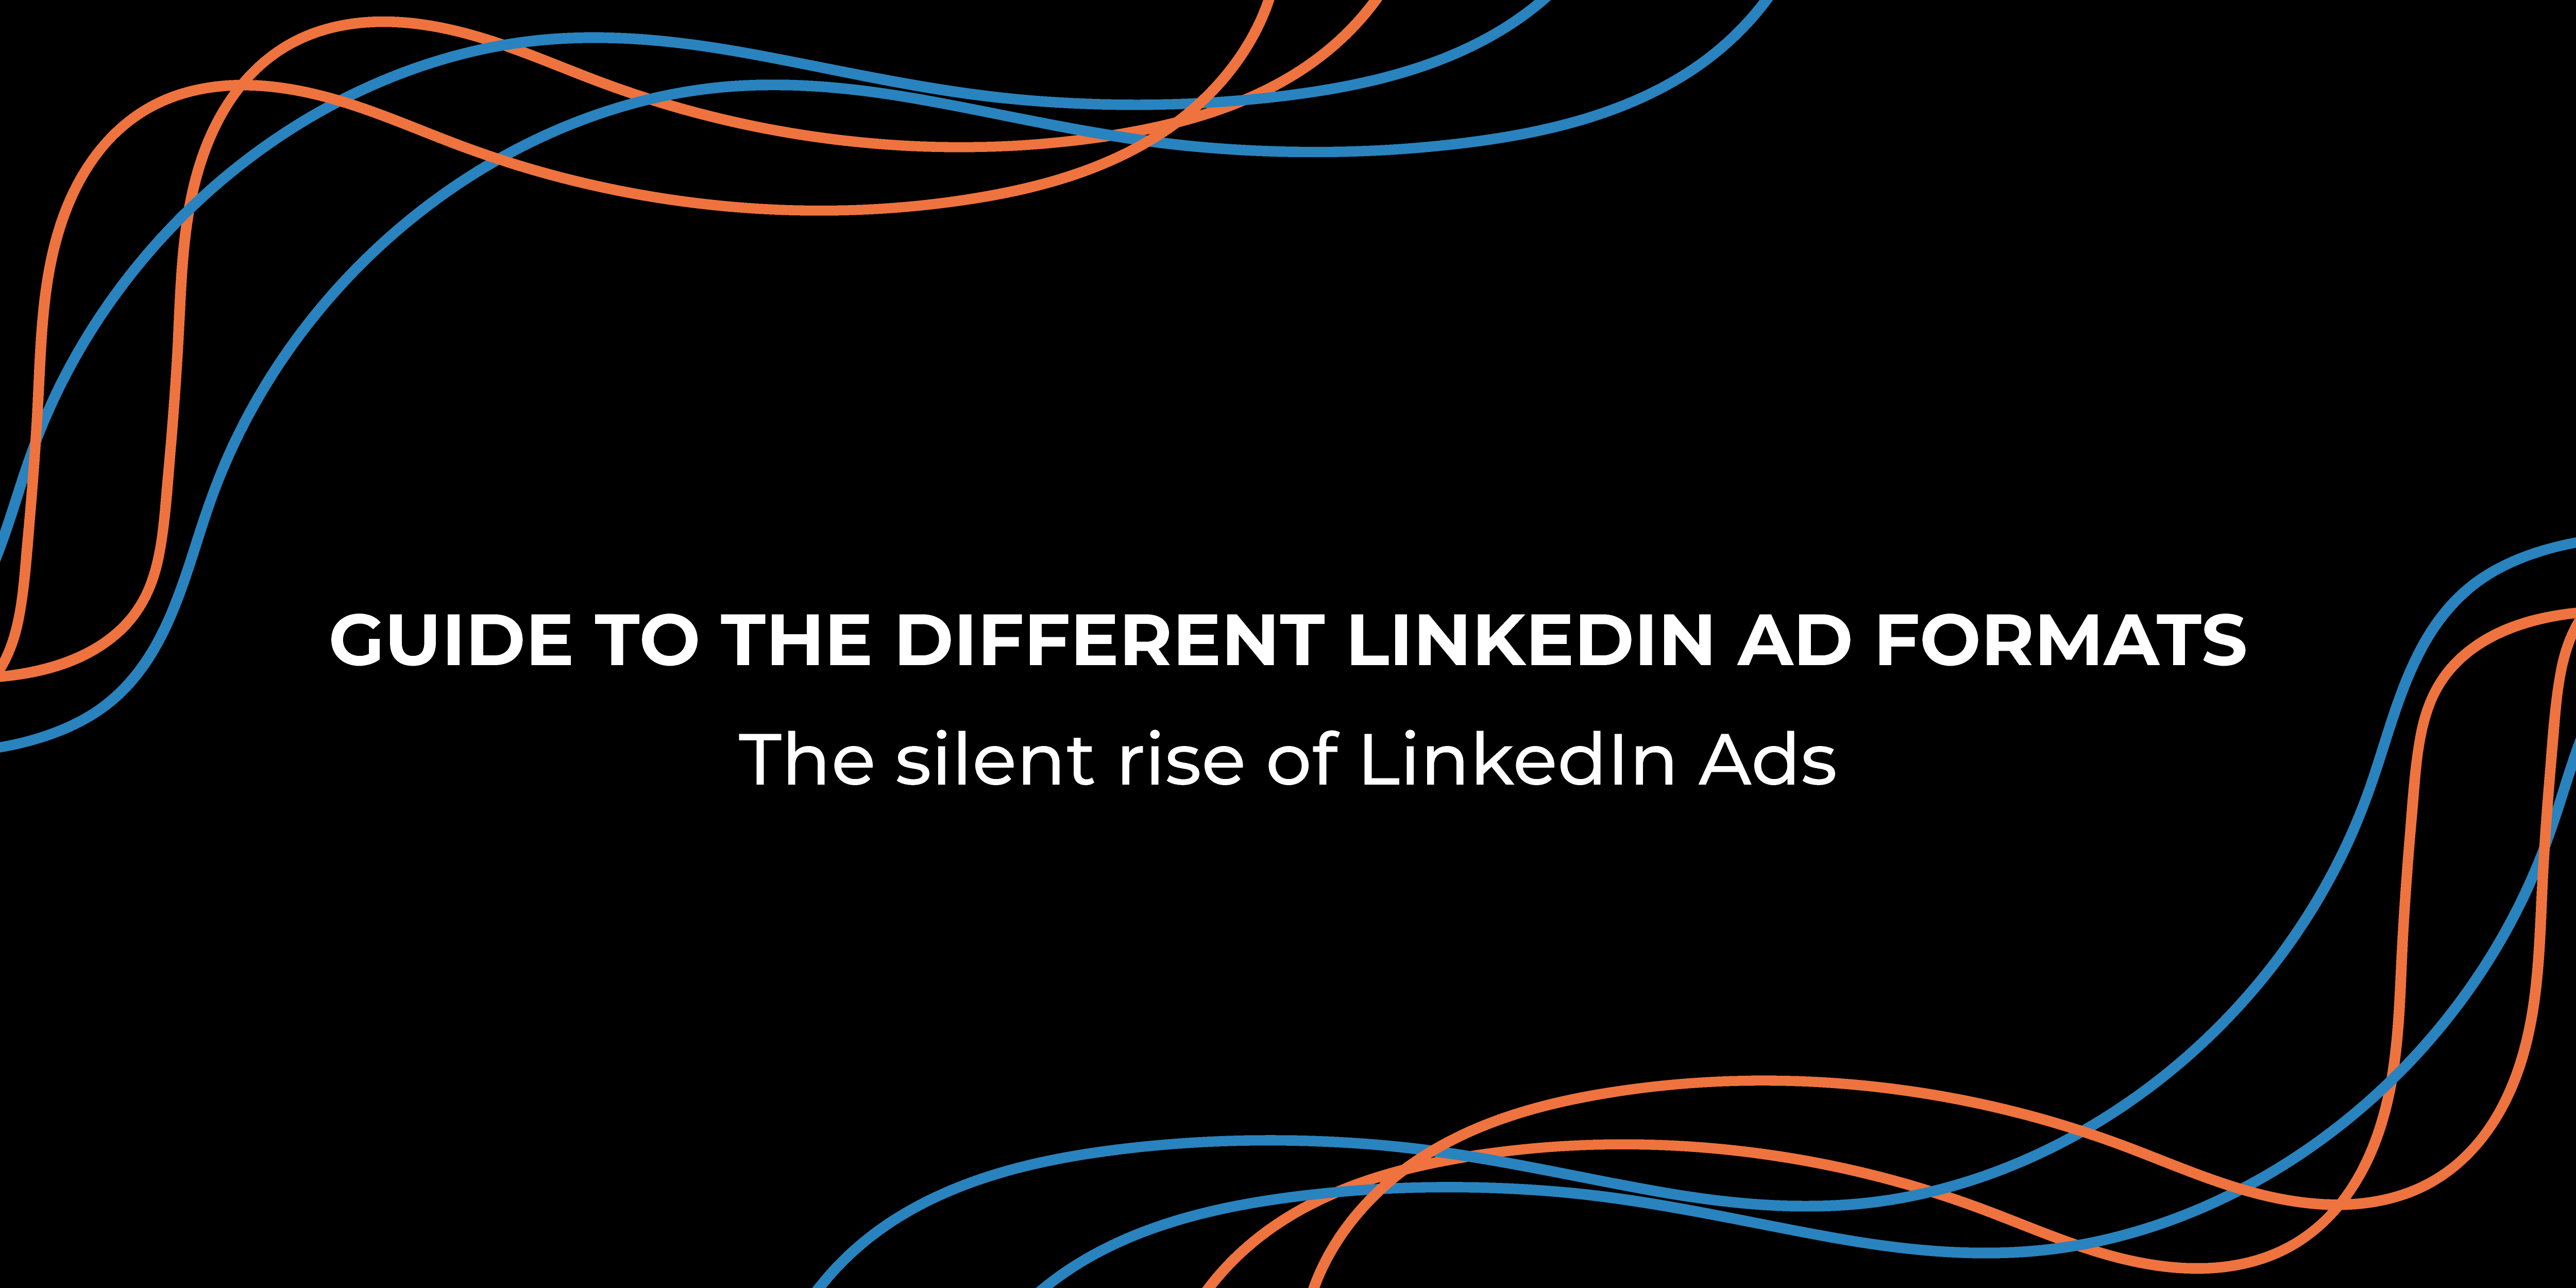 LinkedIn ads | LinkedIn Ad Formats